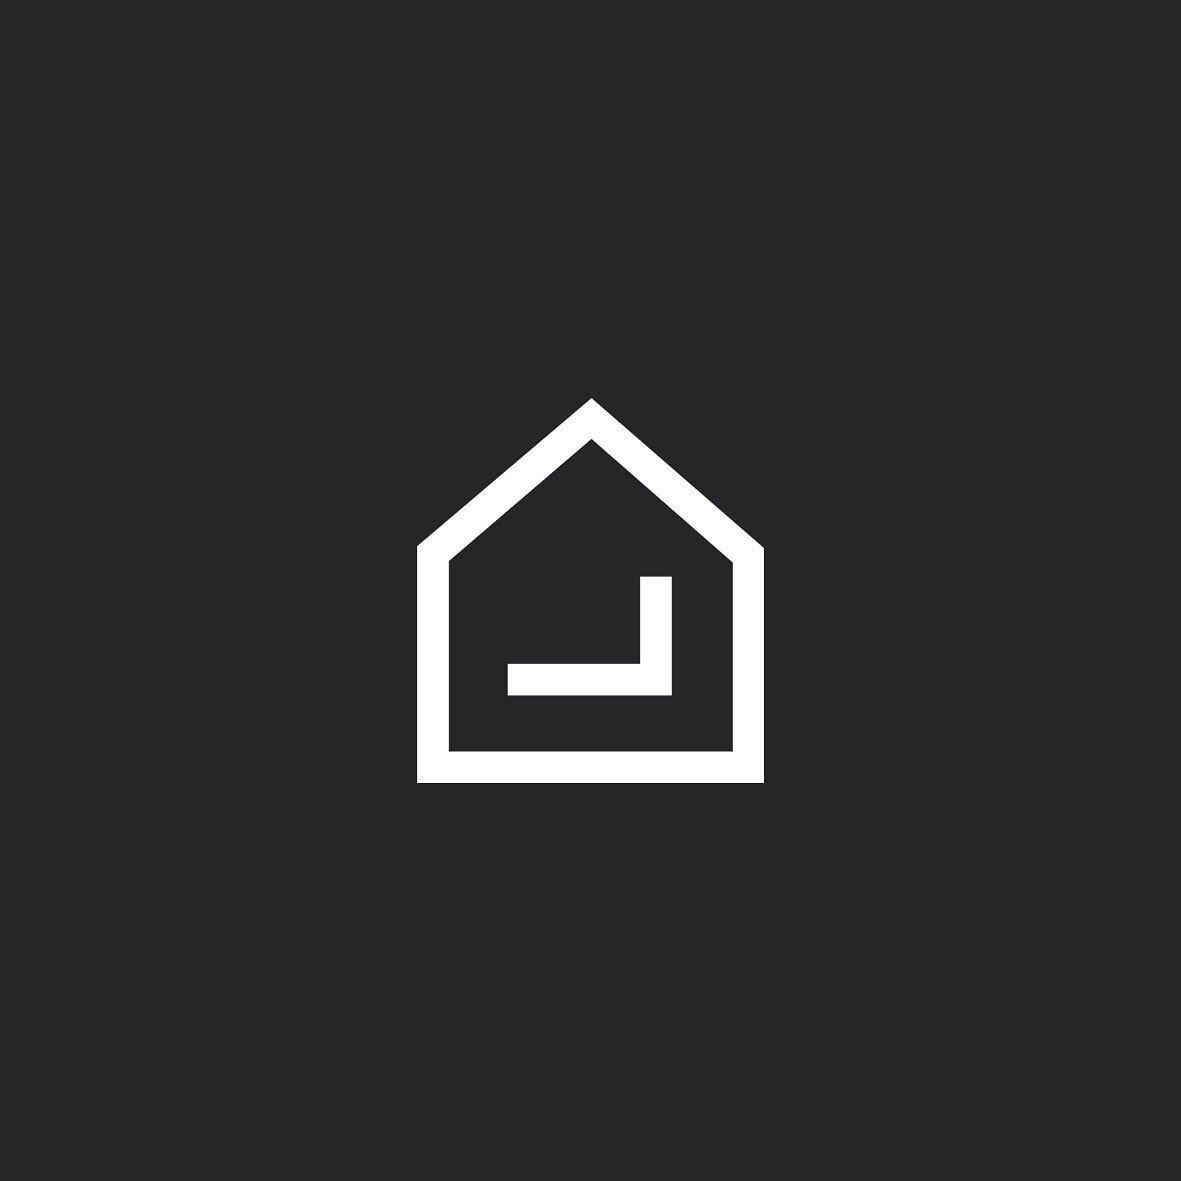 New brand identity for @landscapehouse 🌱⁠
⁠
⁠#chrisraedesign #landscapehouse #landscapedesignsydney #brandidentity #icondesign #sydneydesigner